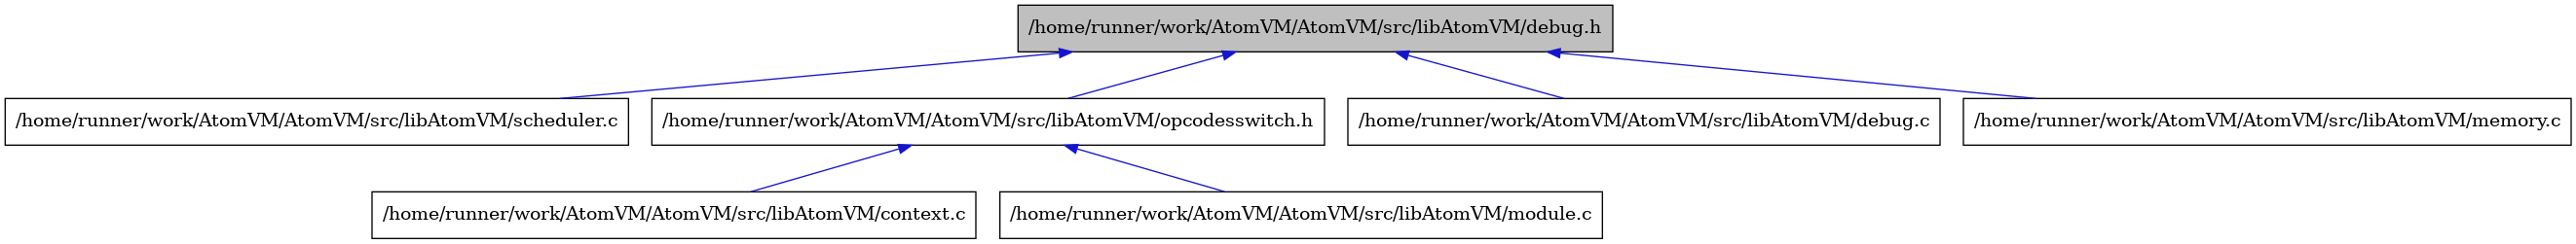 digraph {
    graph [bgcolor="#00000000"]
    node [shape=rectangle style=filled fillcolor="#FFFFFF" font=Helvetica padding=2]
    edge [color="#1414CE"]
    "7" [label="/home/runner/work/AtomVM/AtomVM/src/libAtomVM/scheduler.c" tooltip="/home/runner/work/AtomVM/AtomVM/src/libAtomVM/scheduler.c"]
    "5" [label="/home/runner/work/AtomVM/AtomVM/src/libAtomVM/context.c" tooltip="/home/runner/work/AtomVM/AtomVM/src/libAtomVM/context.c"]
    "6" [label="/home/runner/work/AtomVM/AtomVM/src/libAtomVM/module.c" tooltip="/home/runner/work/AtomVM/AtomVM/src/libAtomVM/module.c"]
    "4" [label="/home/runner/work/AtomVM/AtomVM/src/libAtomVM/opcodesswitch.h" tooltip="/home/runner/work/AtomVM/AtomVM/src/libAtomVM/opcodesswitch.h"]
    "2" [label="/home/runner/work/AtomVM/AtomVM/src/libAtomVM/debug.c" tooltip="/home/runner/work/AtomVM/AtomVM/src/libAtomVM/debug.c"]
    "1" [label="/home/runner/work/AtomVM/AtomVM/src/libAtomVM/debug.h" tooltip="/home/runner/work/AtomVM/AtomVM/src/libAtomVM/debug.h" fillcolor="#BFBFBF"]
    "3" [label="/home/runner/work/AtomVM/AtomVM/src/libAtomVM/memory.c" tooltip="/home/runner/work/AtomVM/AtomVM/src/libAtomVM/memory.c"]
    "4" -> "5" [dir=back tooltip="include"]
    "4" -> "6" [dir=back tooltip="include"]
    "1" -> "2" [dir=back tooltip="include"]
    "1" -> "3" [dir=back tooltip="include"]
    "1" -> "4" [dir=back tooltip="include"]
    "1" -> "7" [dir=back tooltip="include"]
}